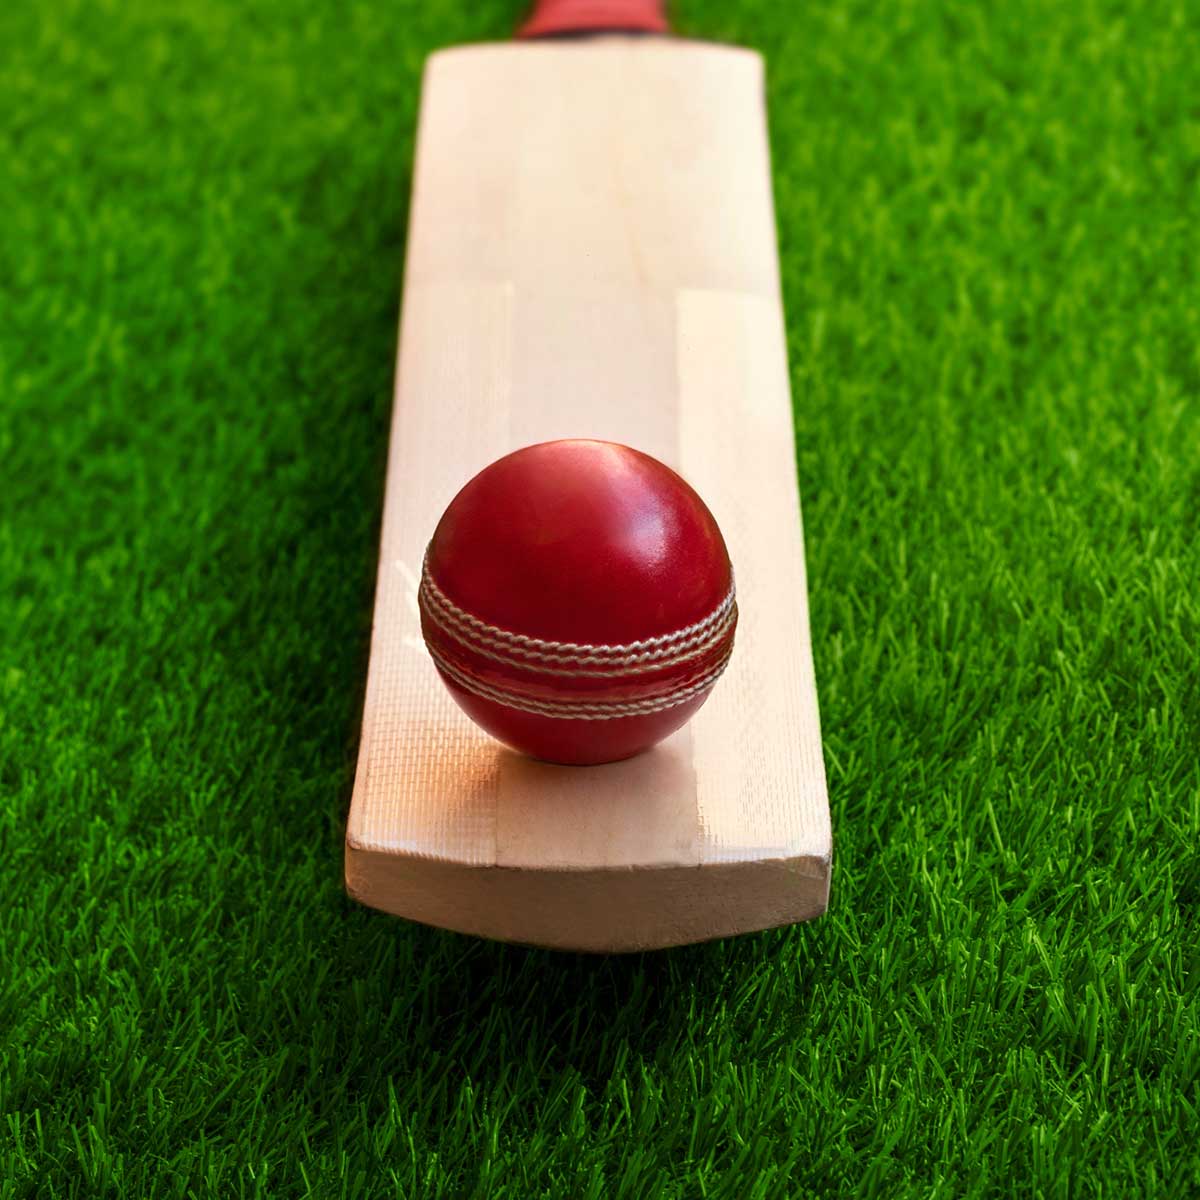 Cricket Bats Manufacturers in Pakistan